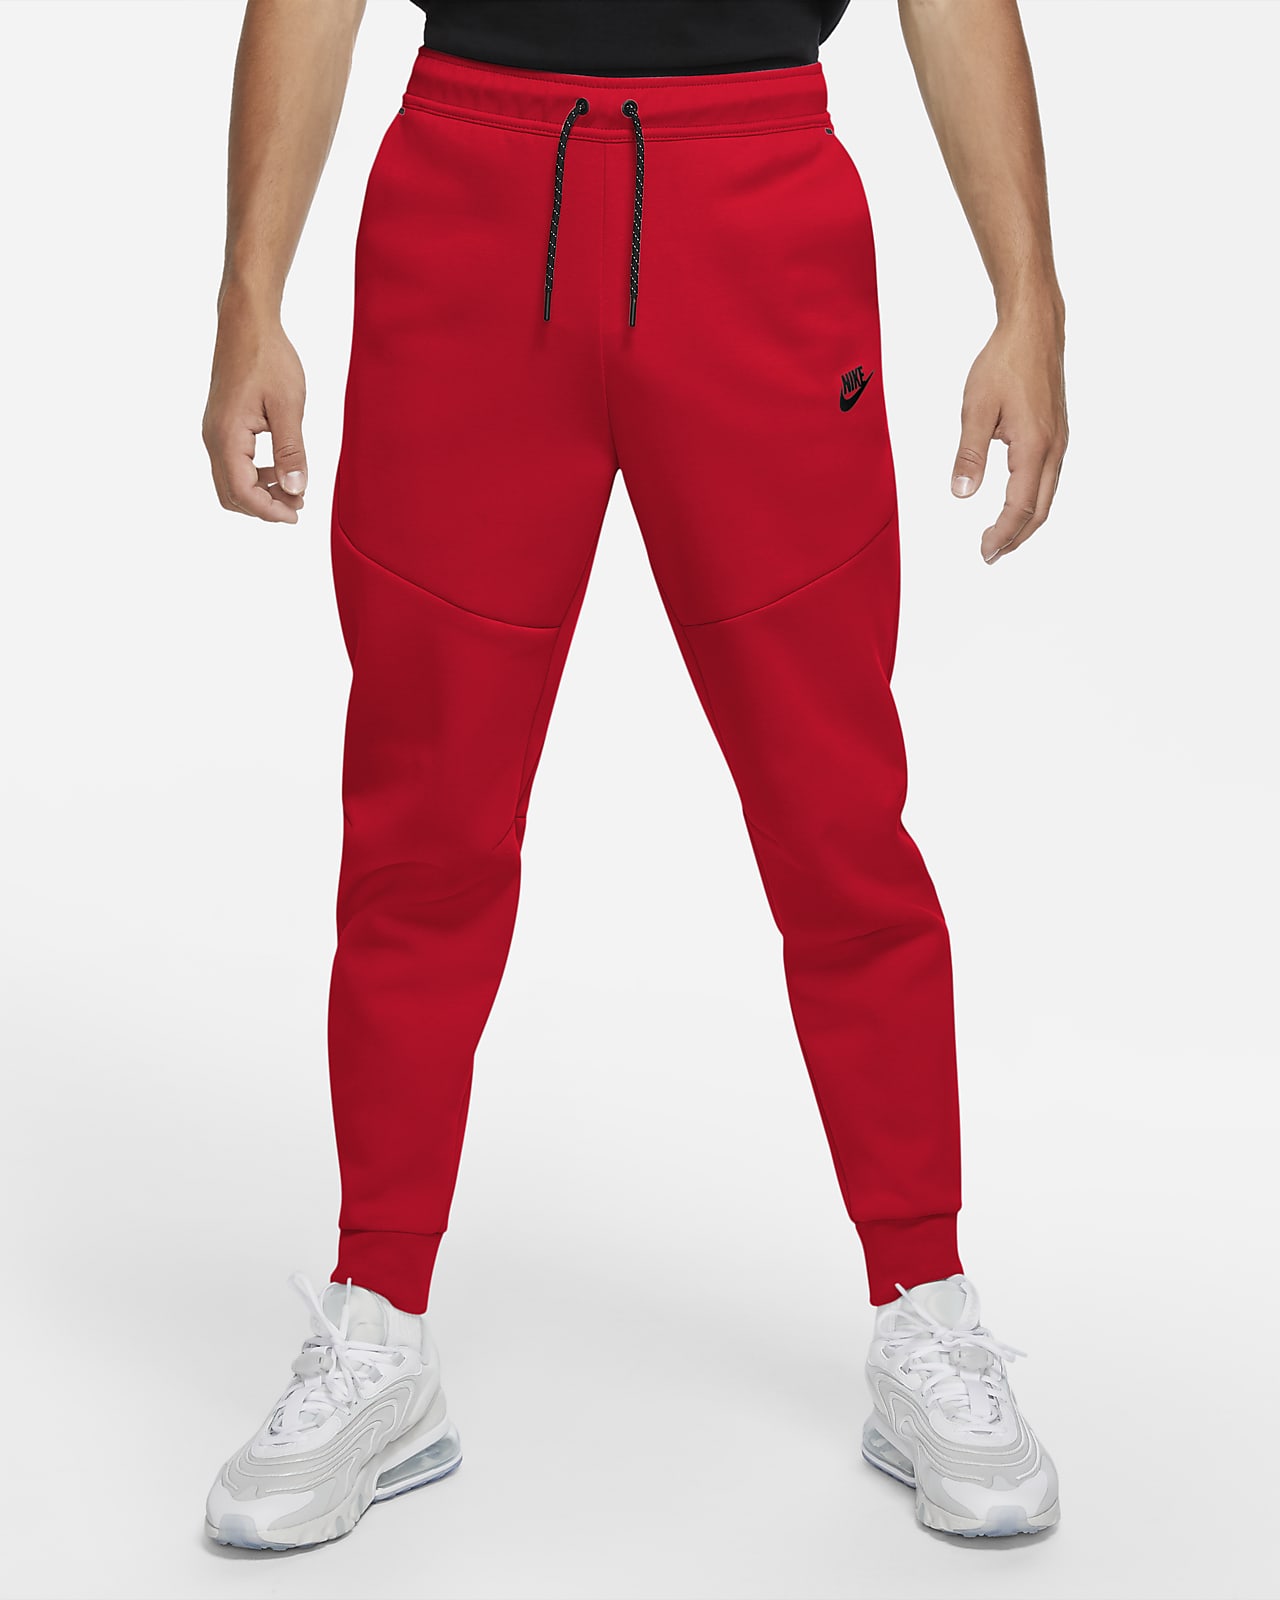 Pantalones deportivos para hombre Nike Sportswear Tech Fleece